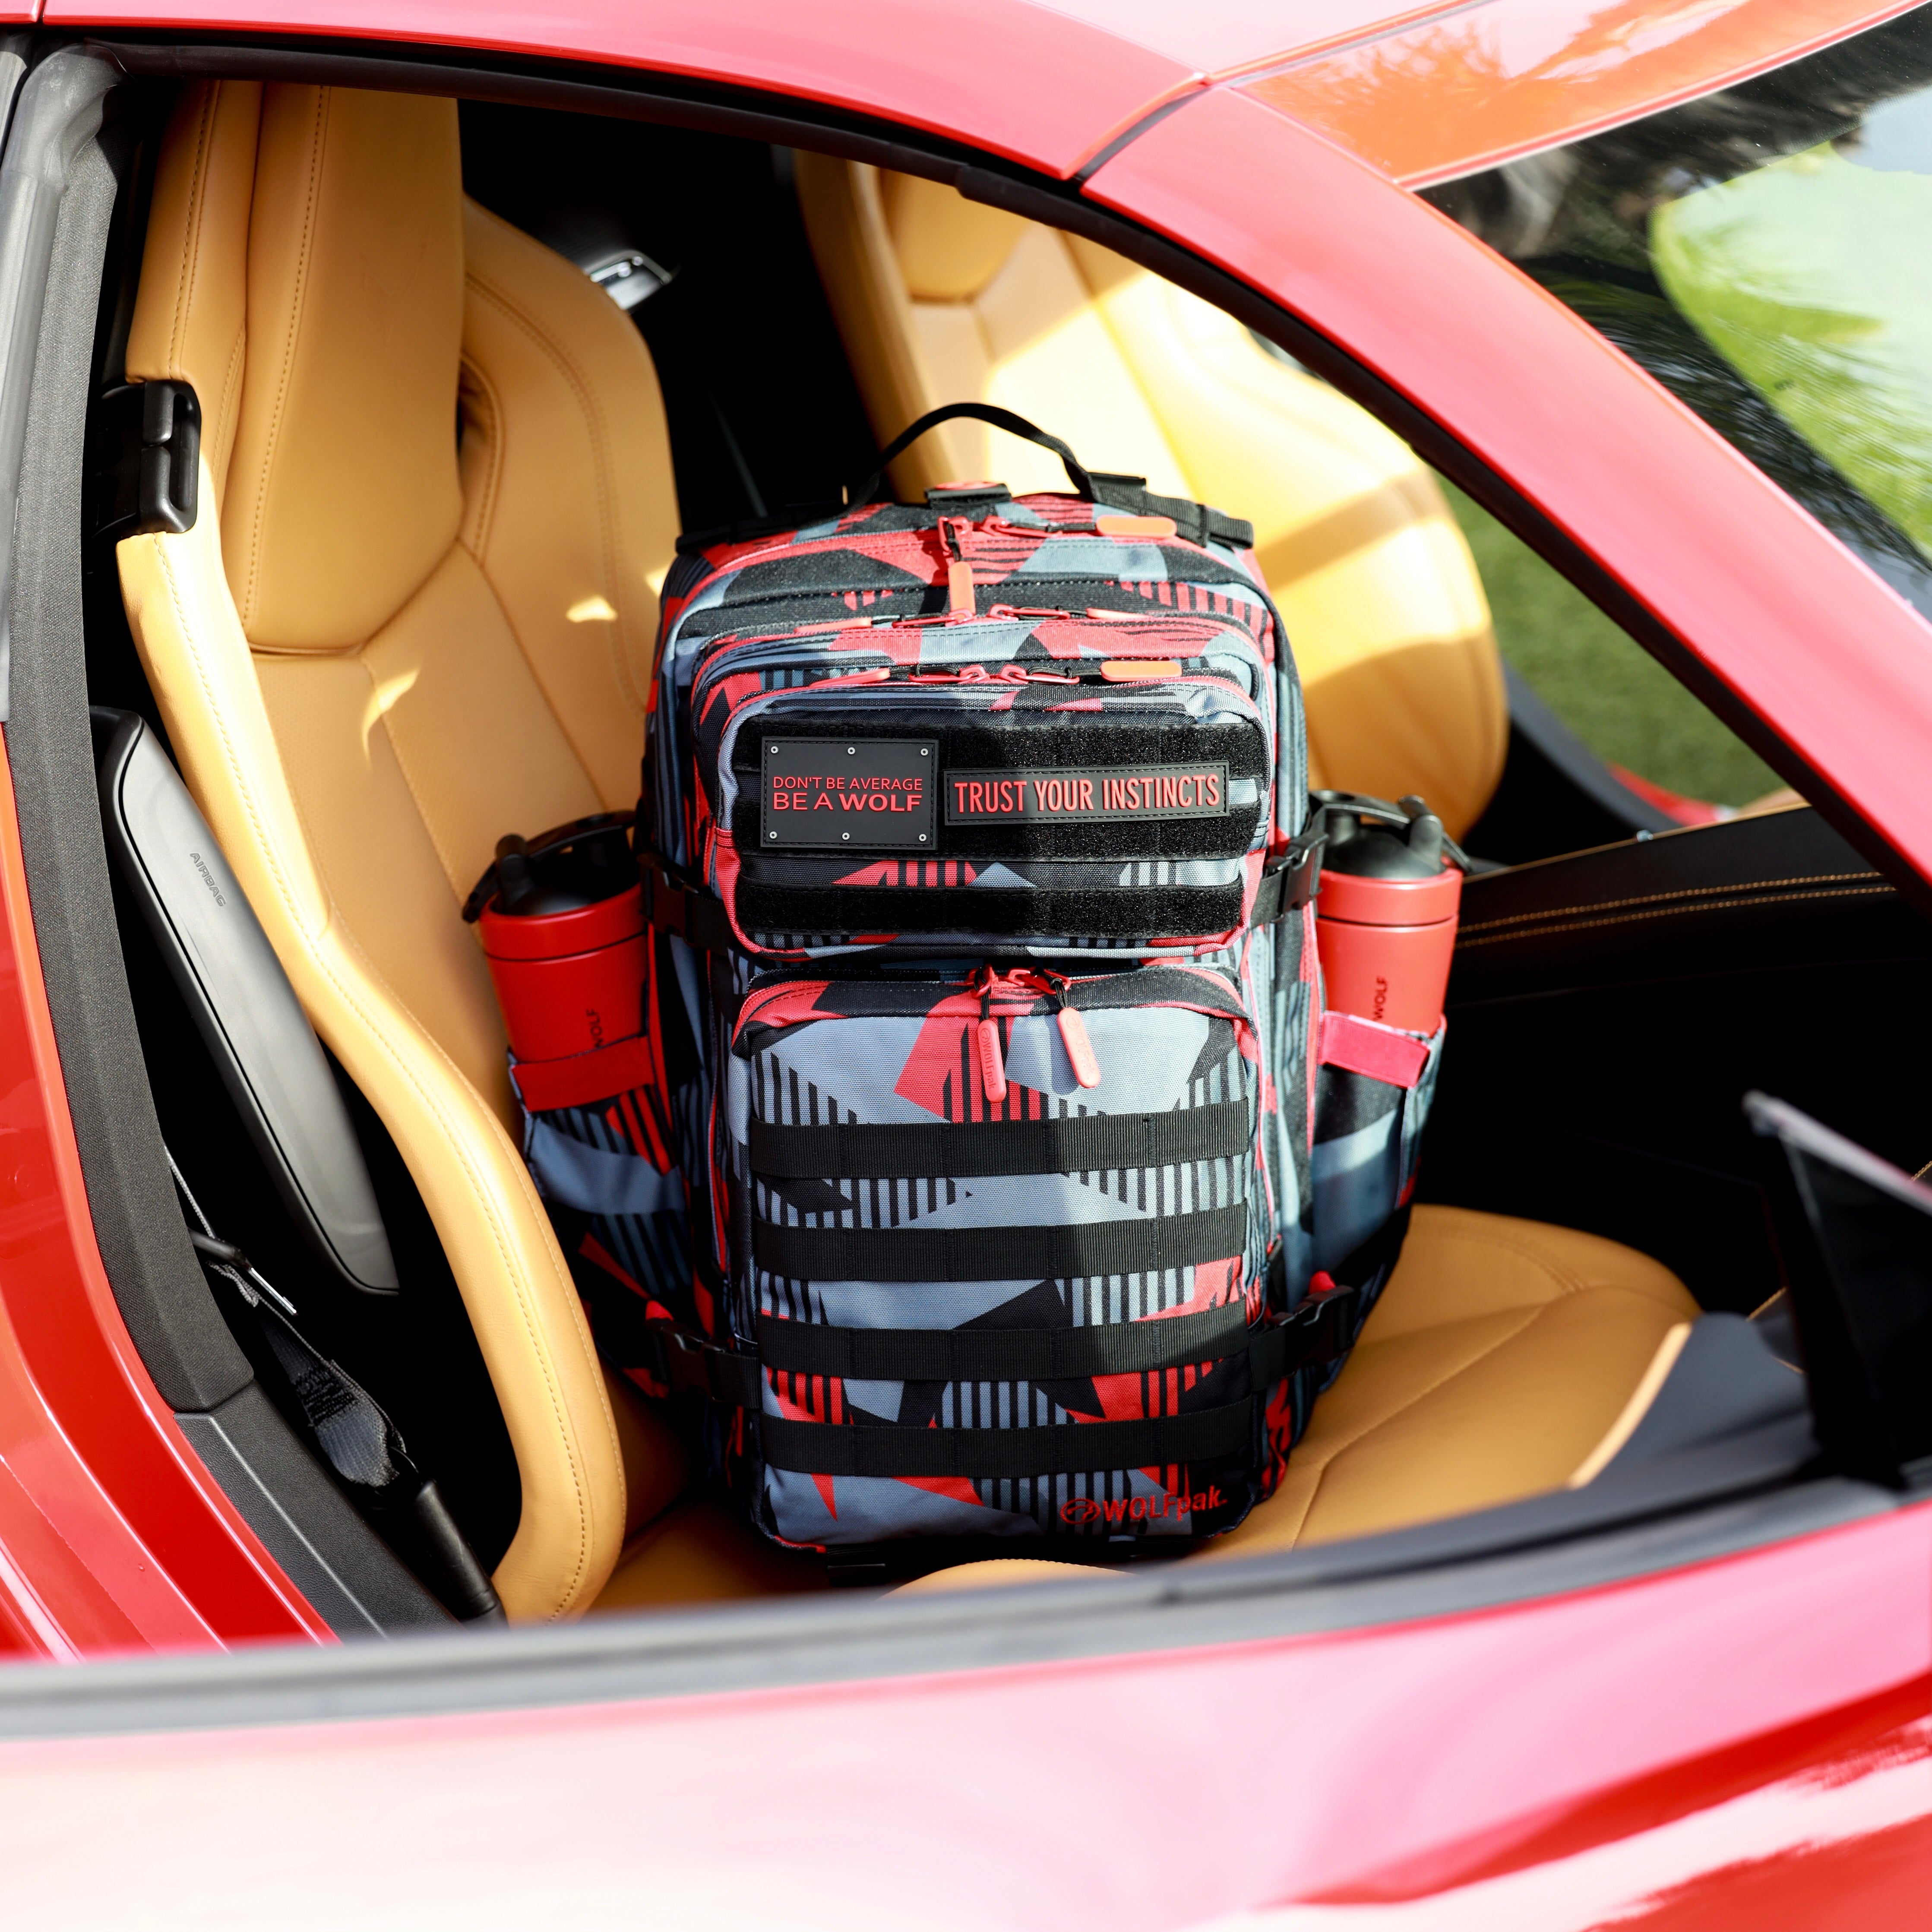 45L Backpack Adrenaline Red